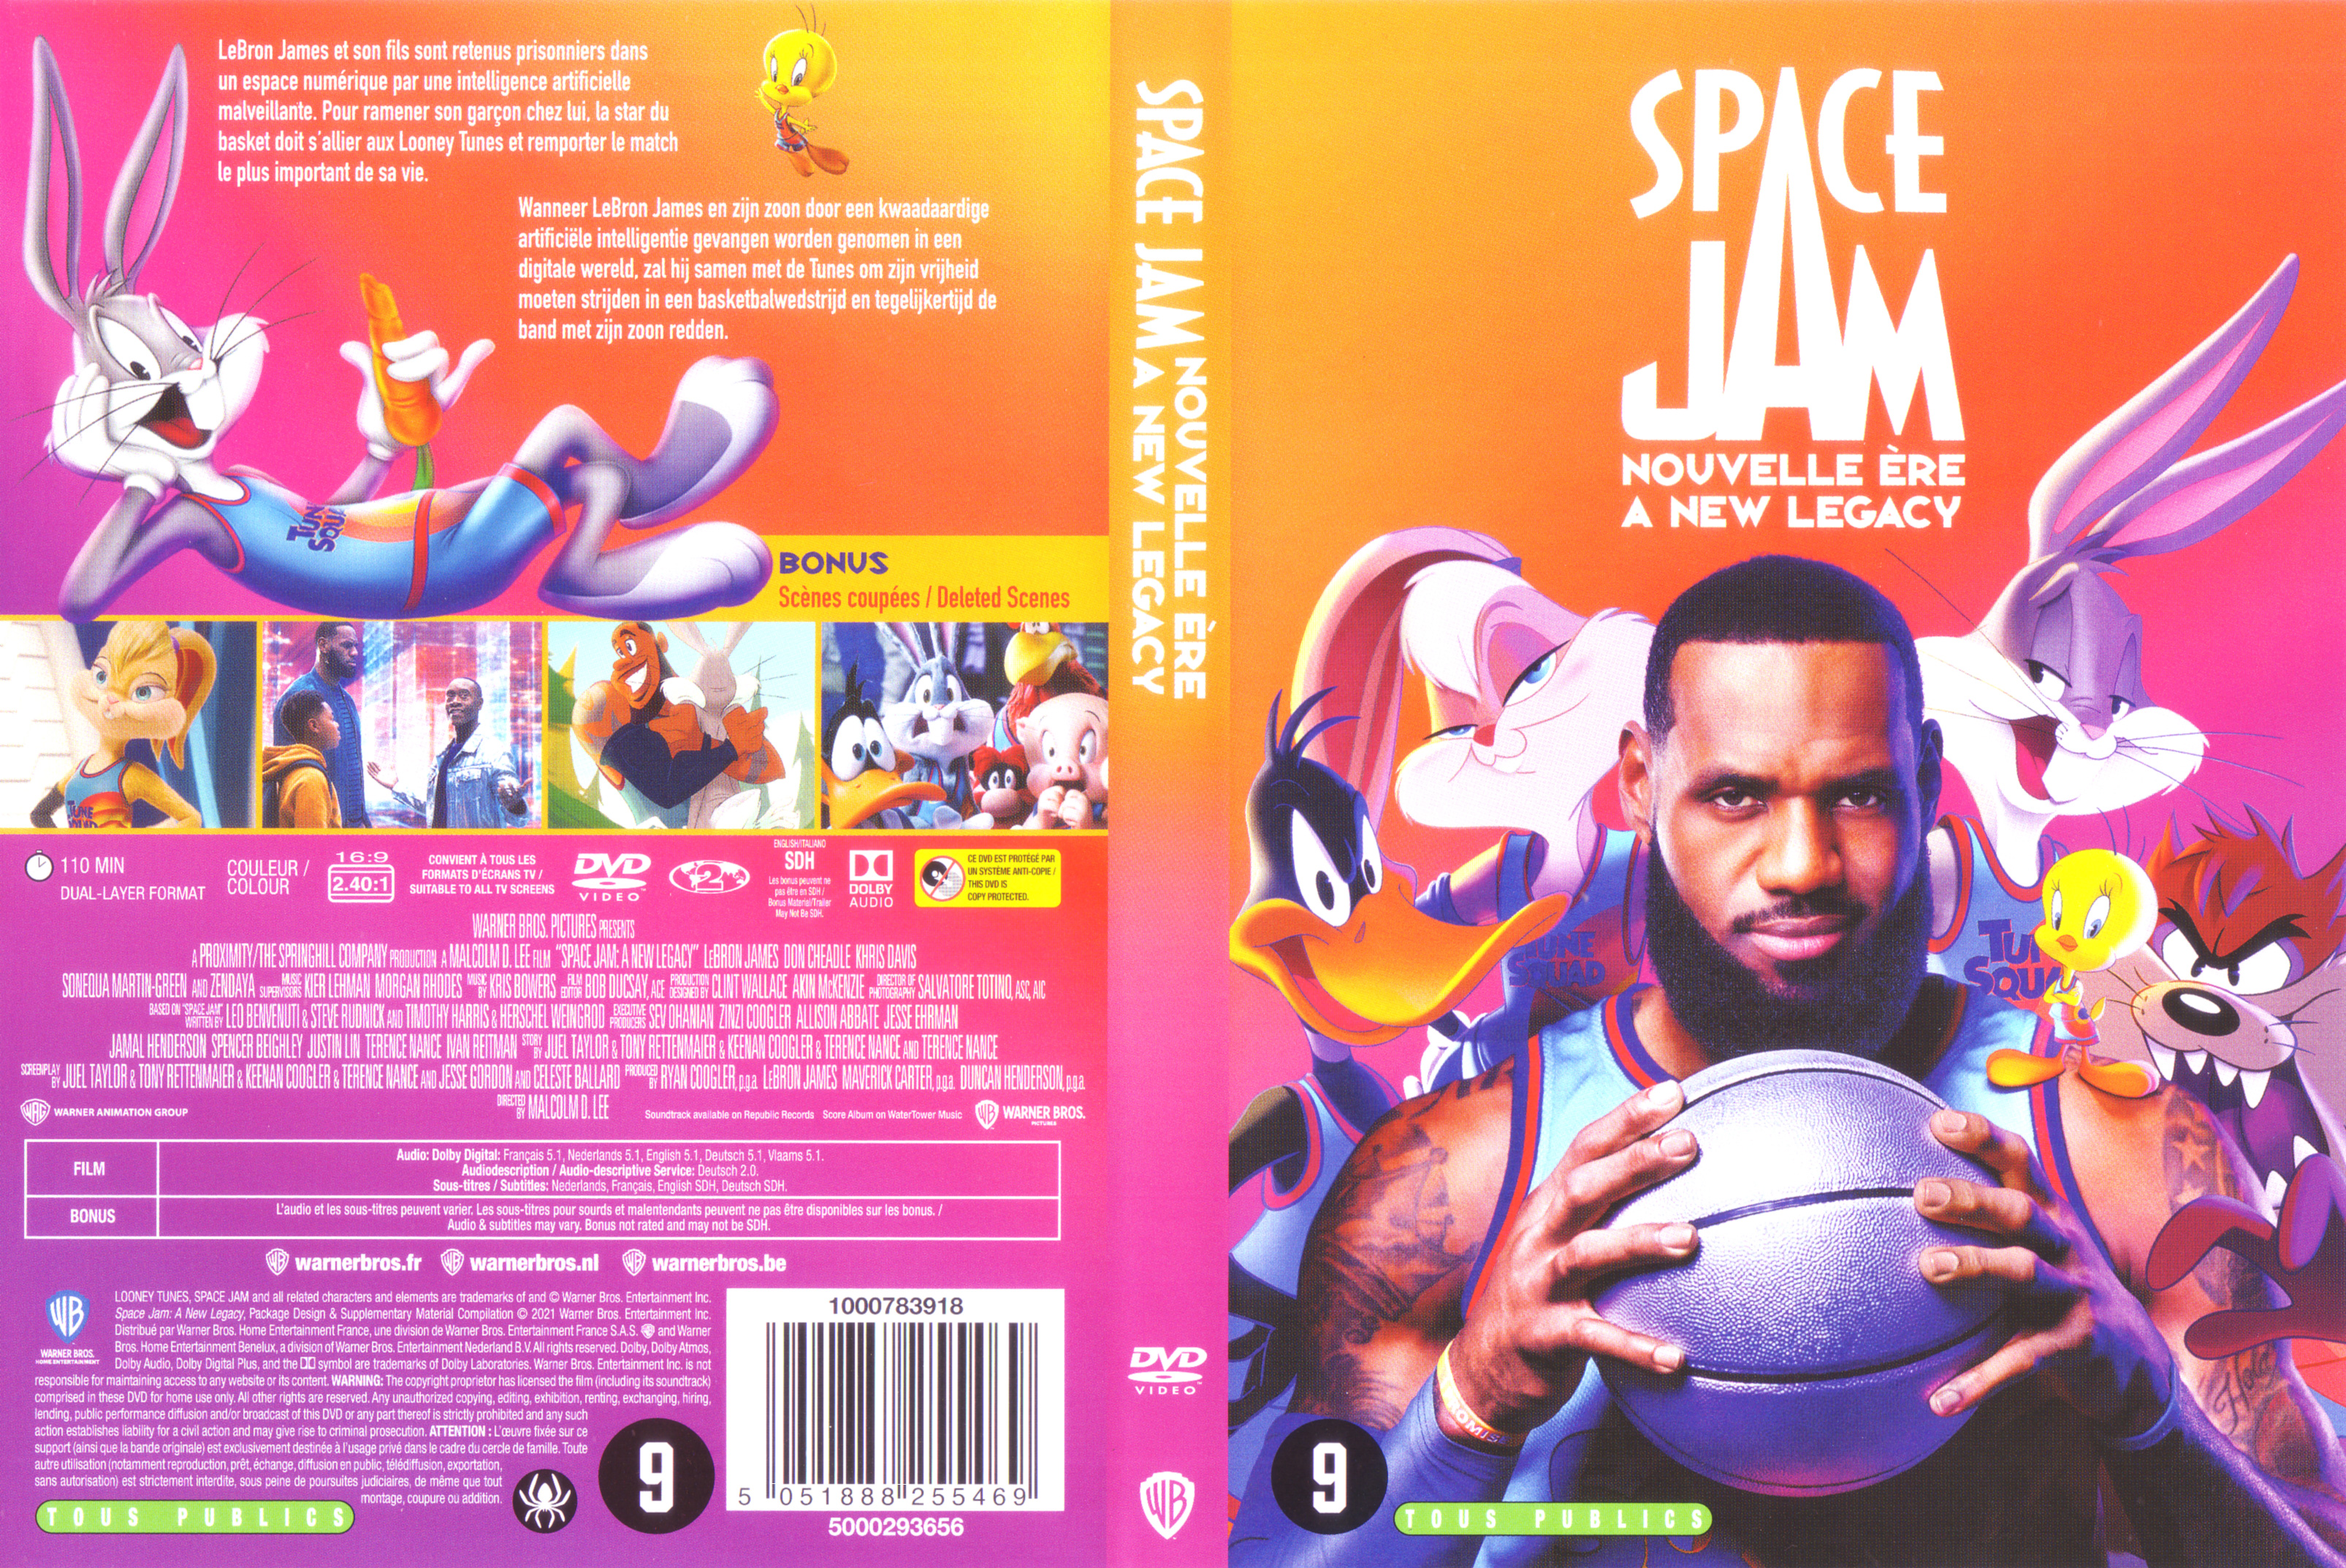 Jaquette DVD Space Jam Nouvelle ere A new legacy